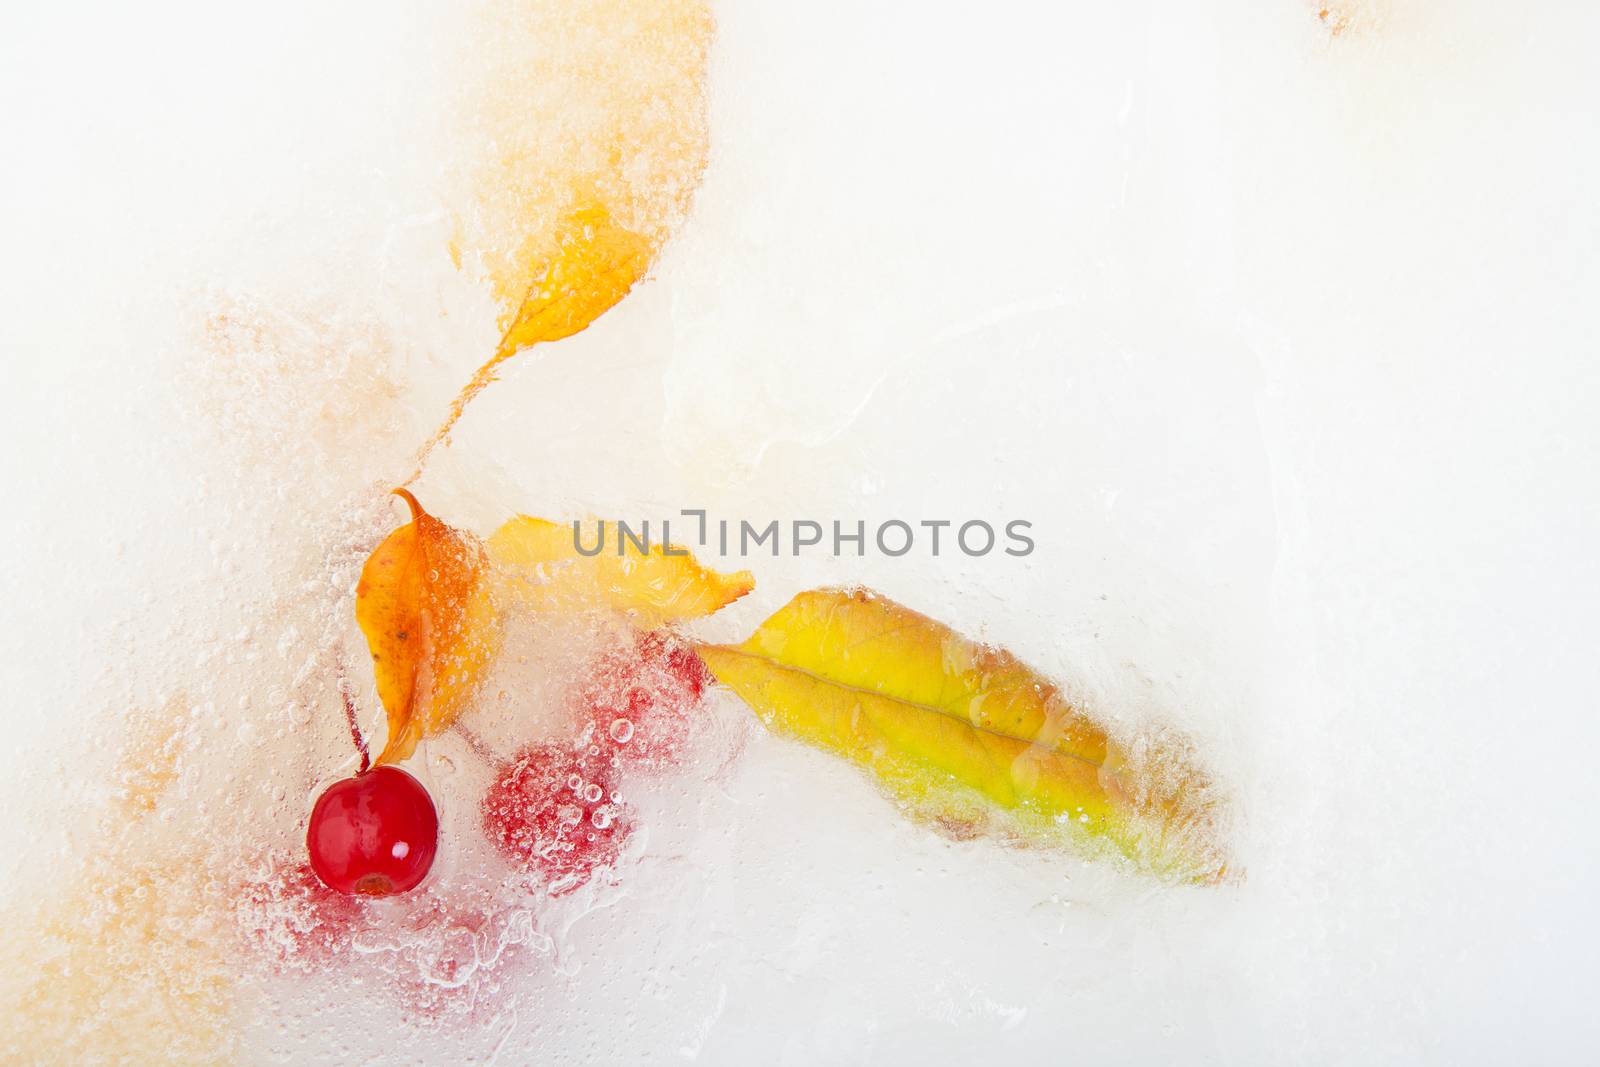 Leaves & Berries in Ice by songbird839